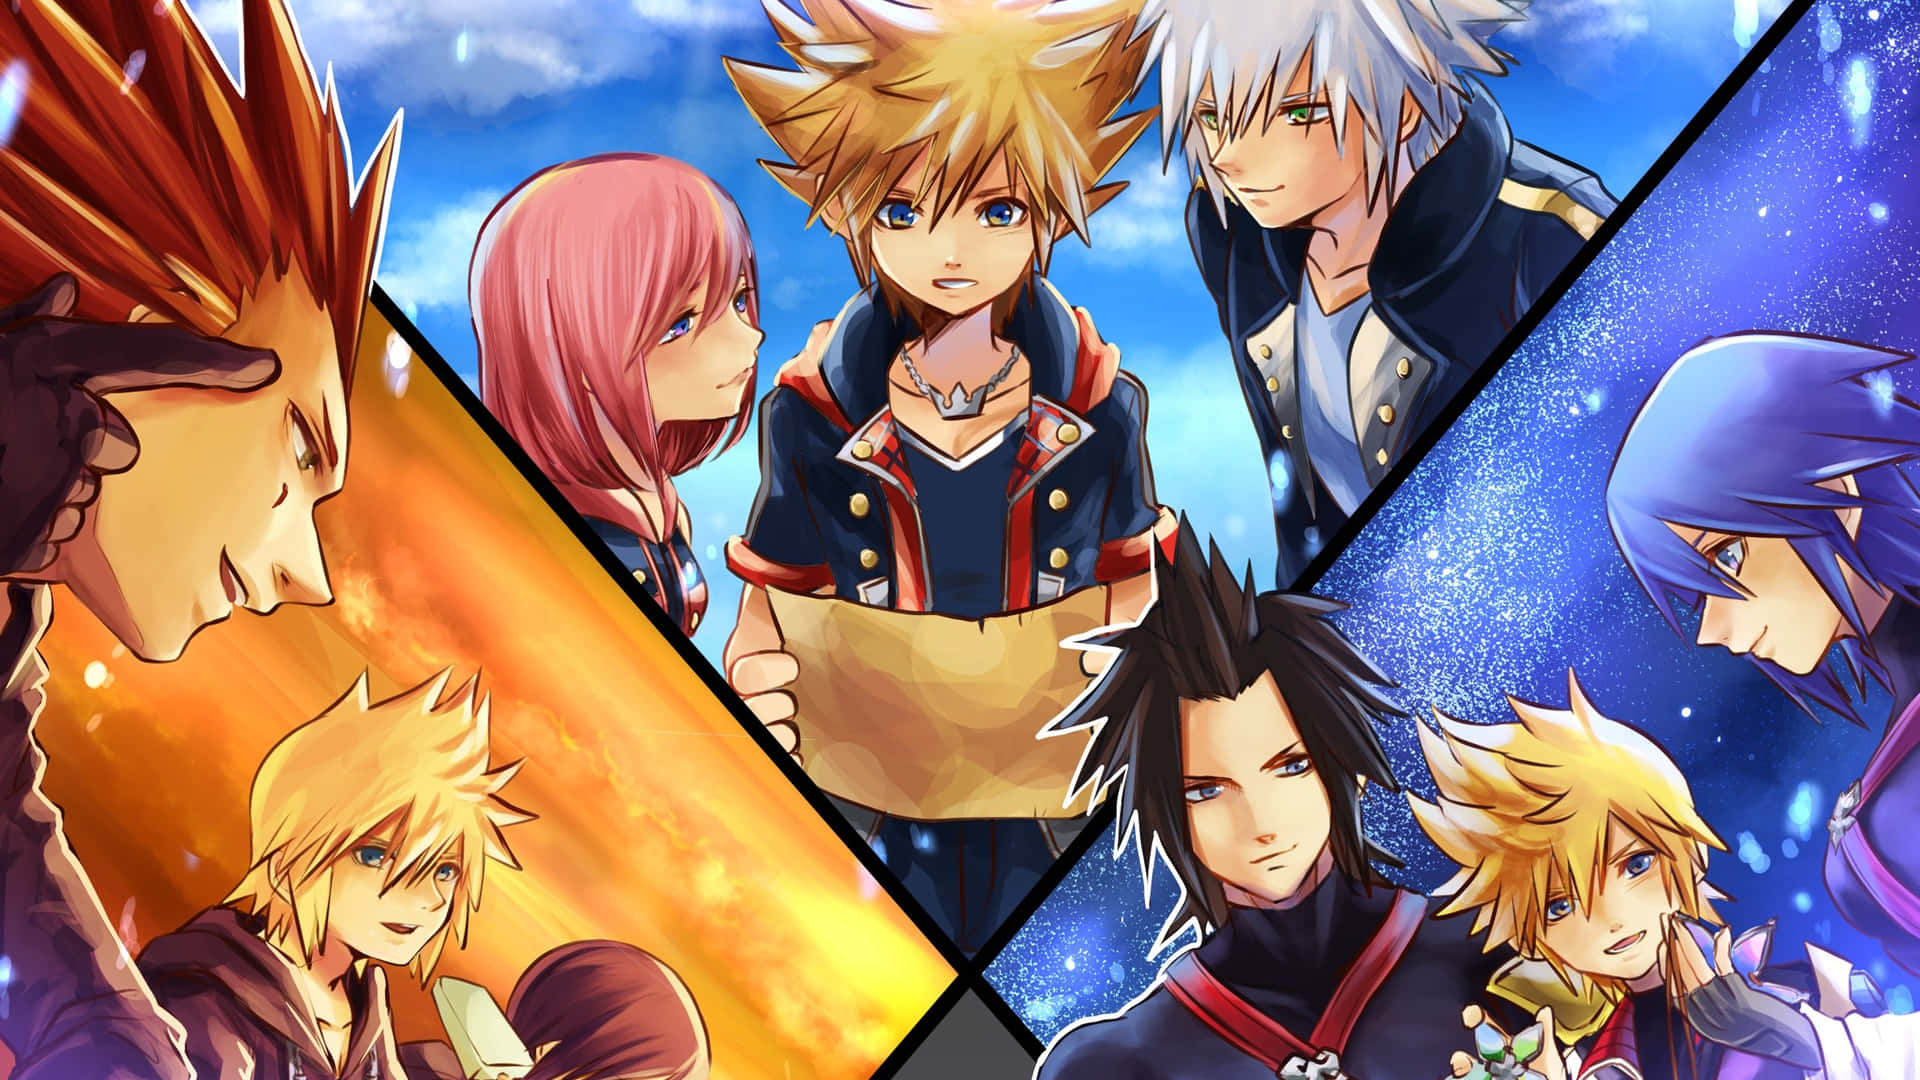 Kingdom Hearts Background Wallpaper